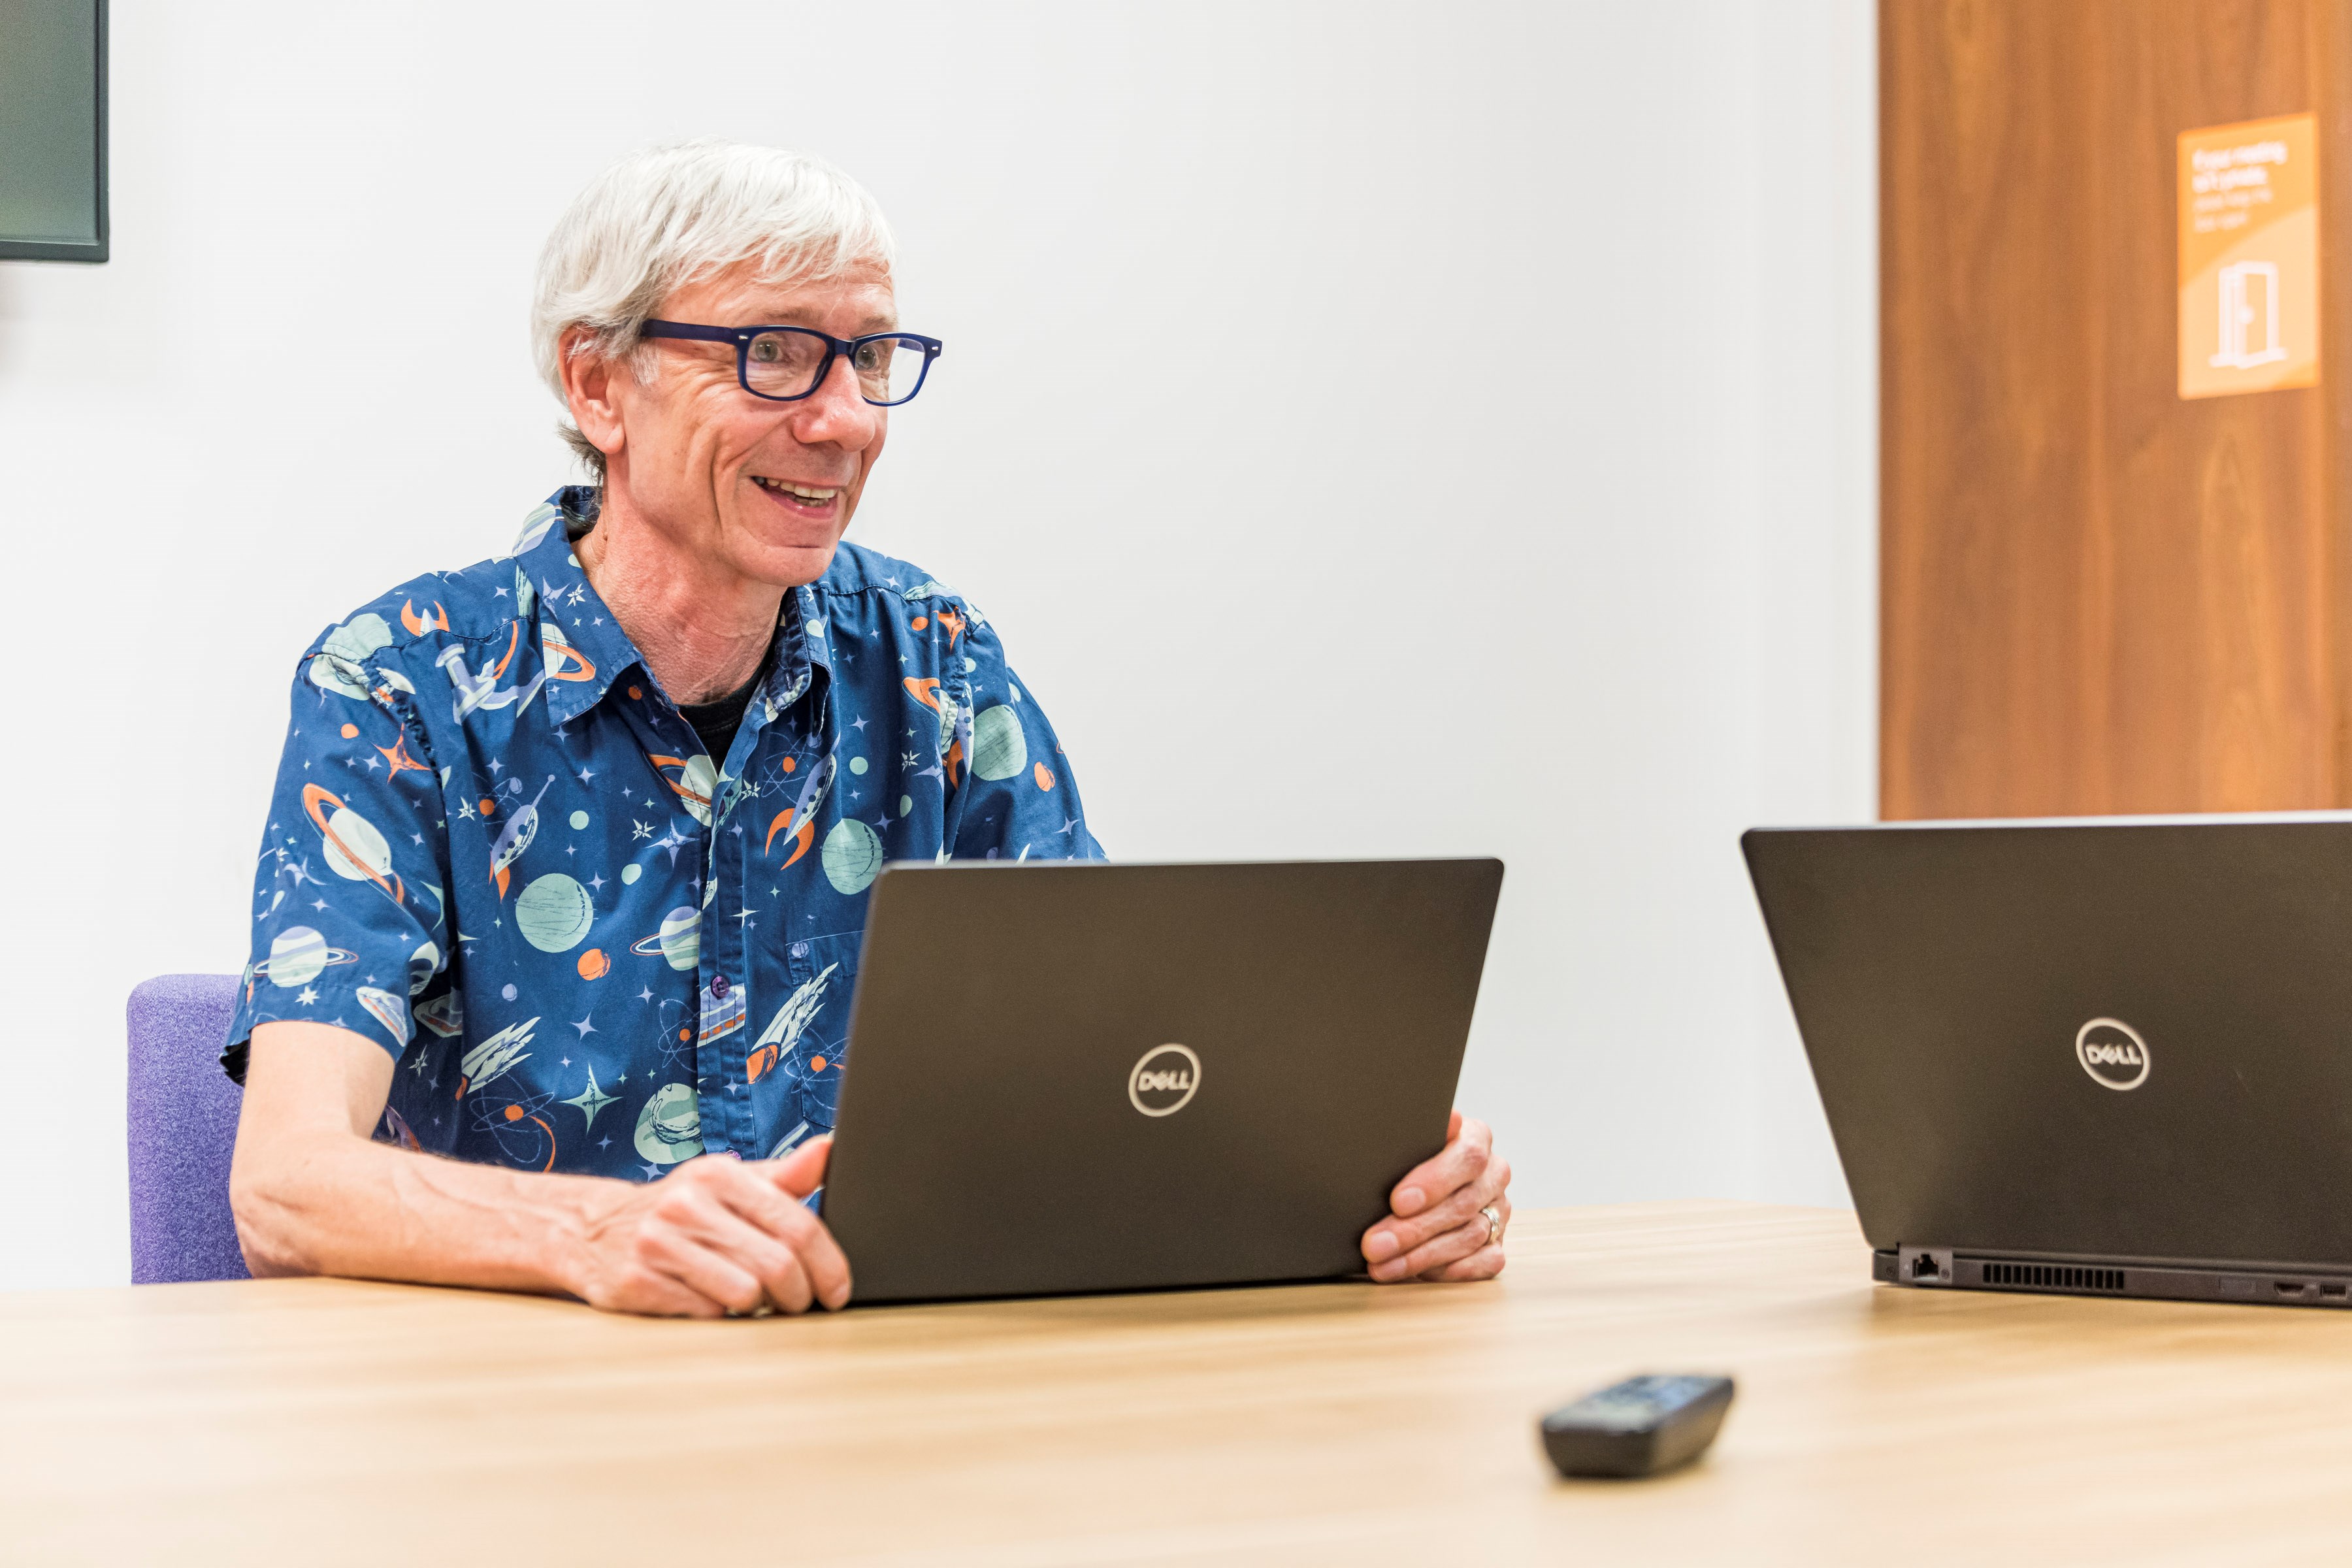 Man sitting at a computer screen smiling